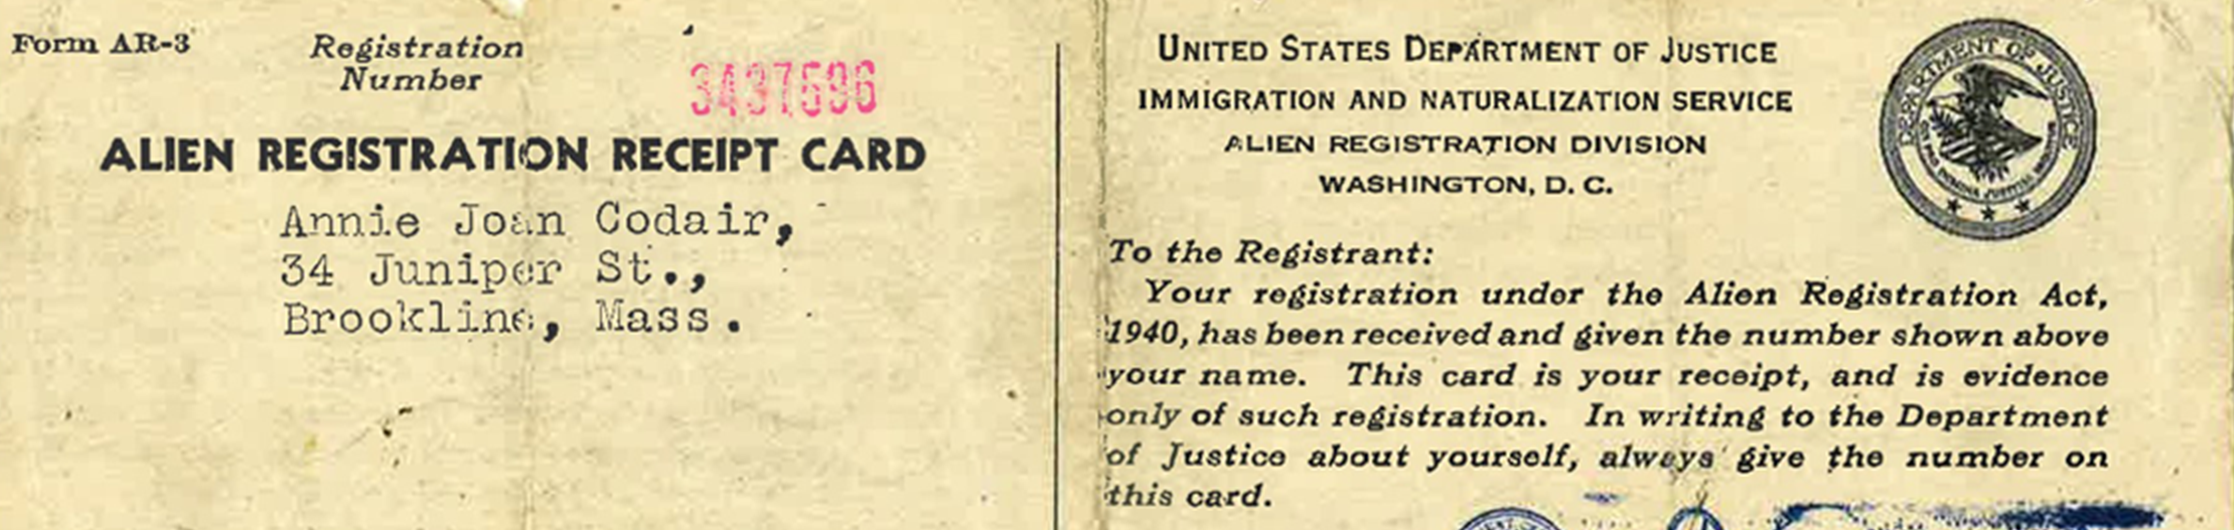 Historical photo of a Alien Registration Card Receipt